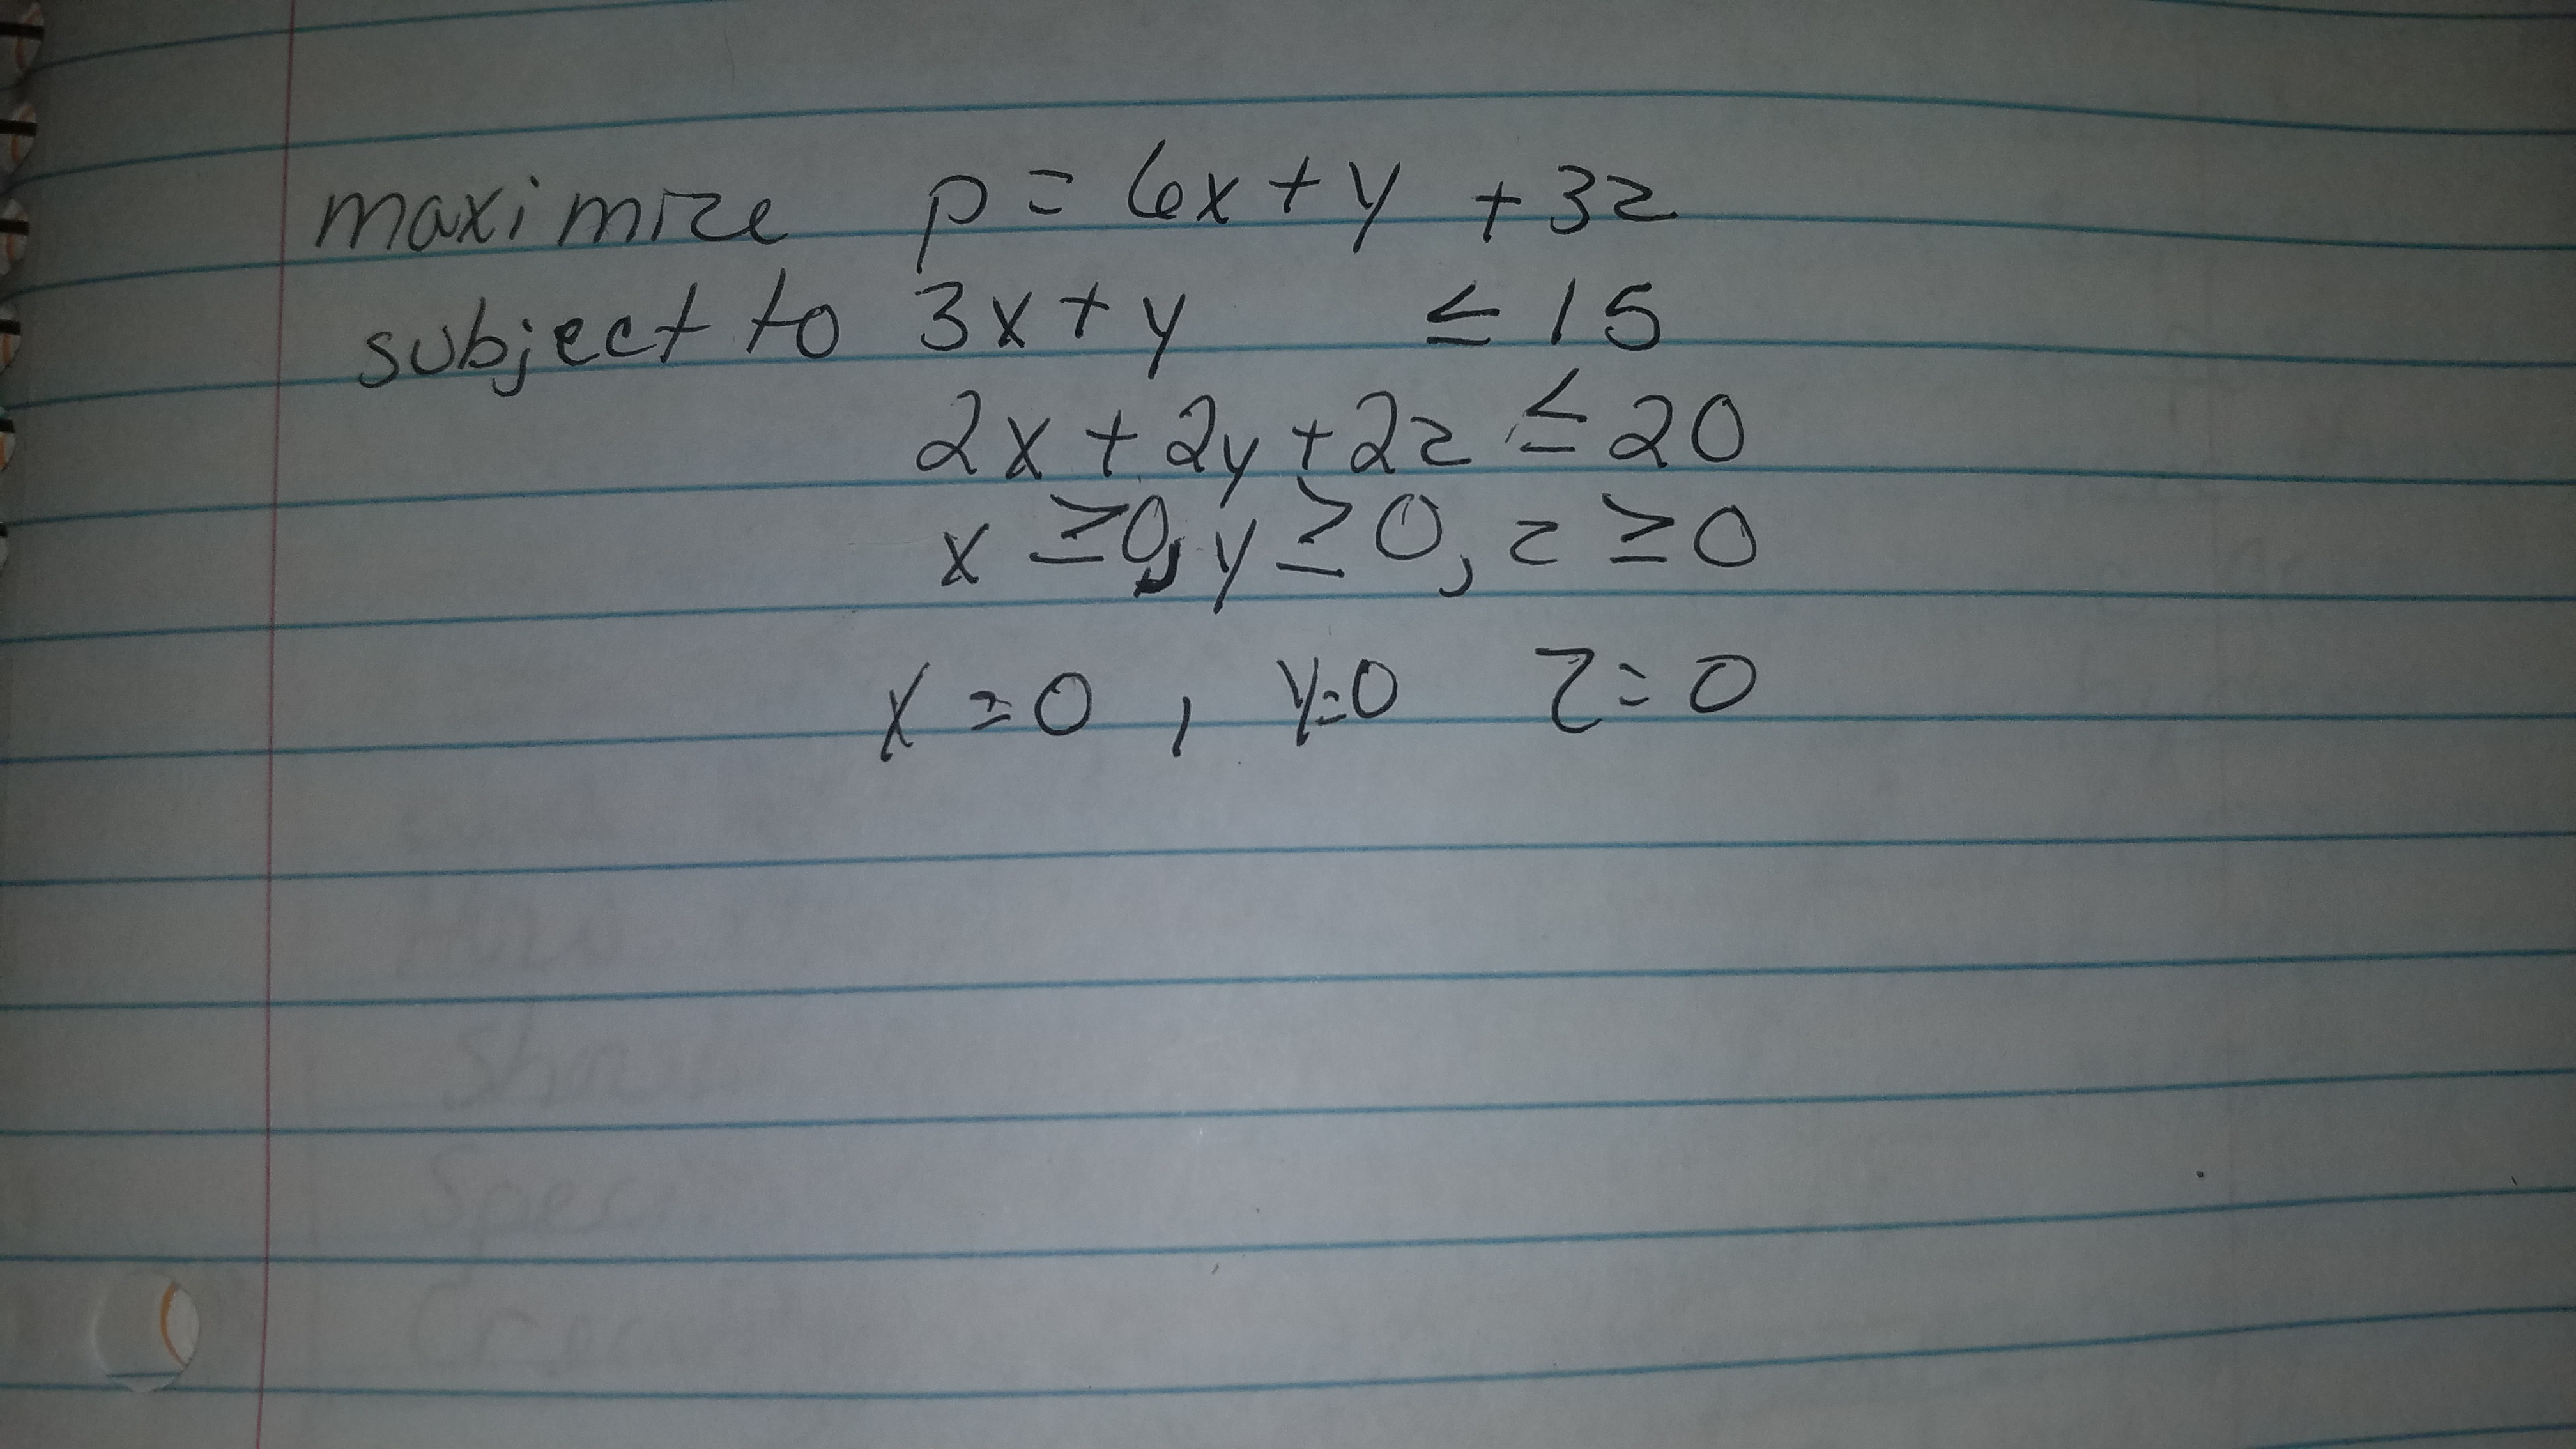 maximize p:6x+y +32
subiect to 3xty
<15
2x+2yt22=20
Y-0
7:0
